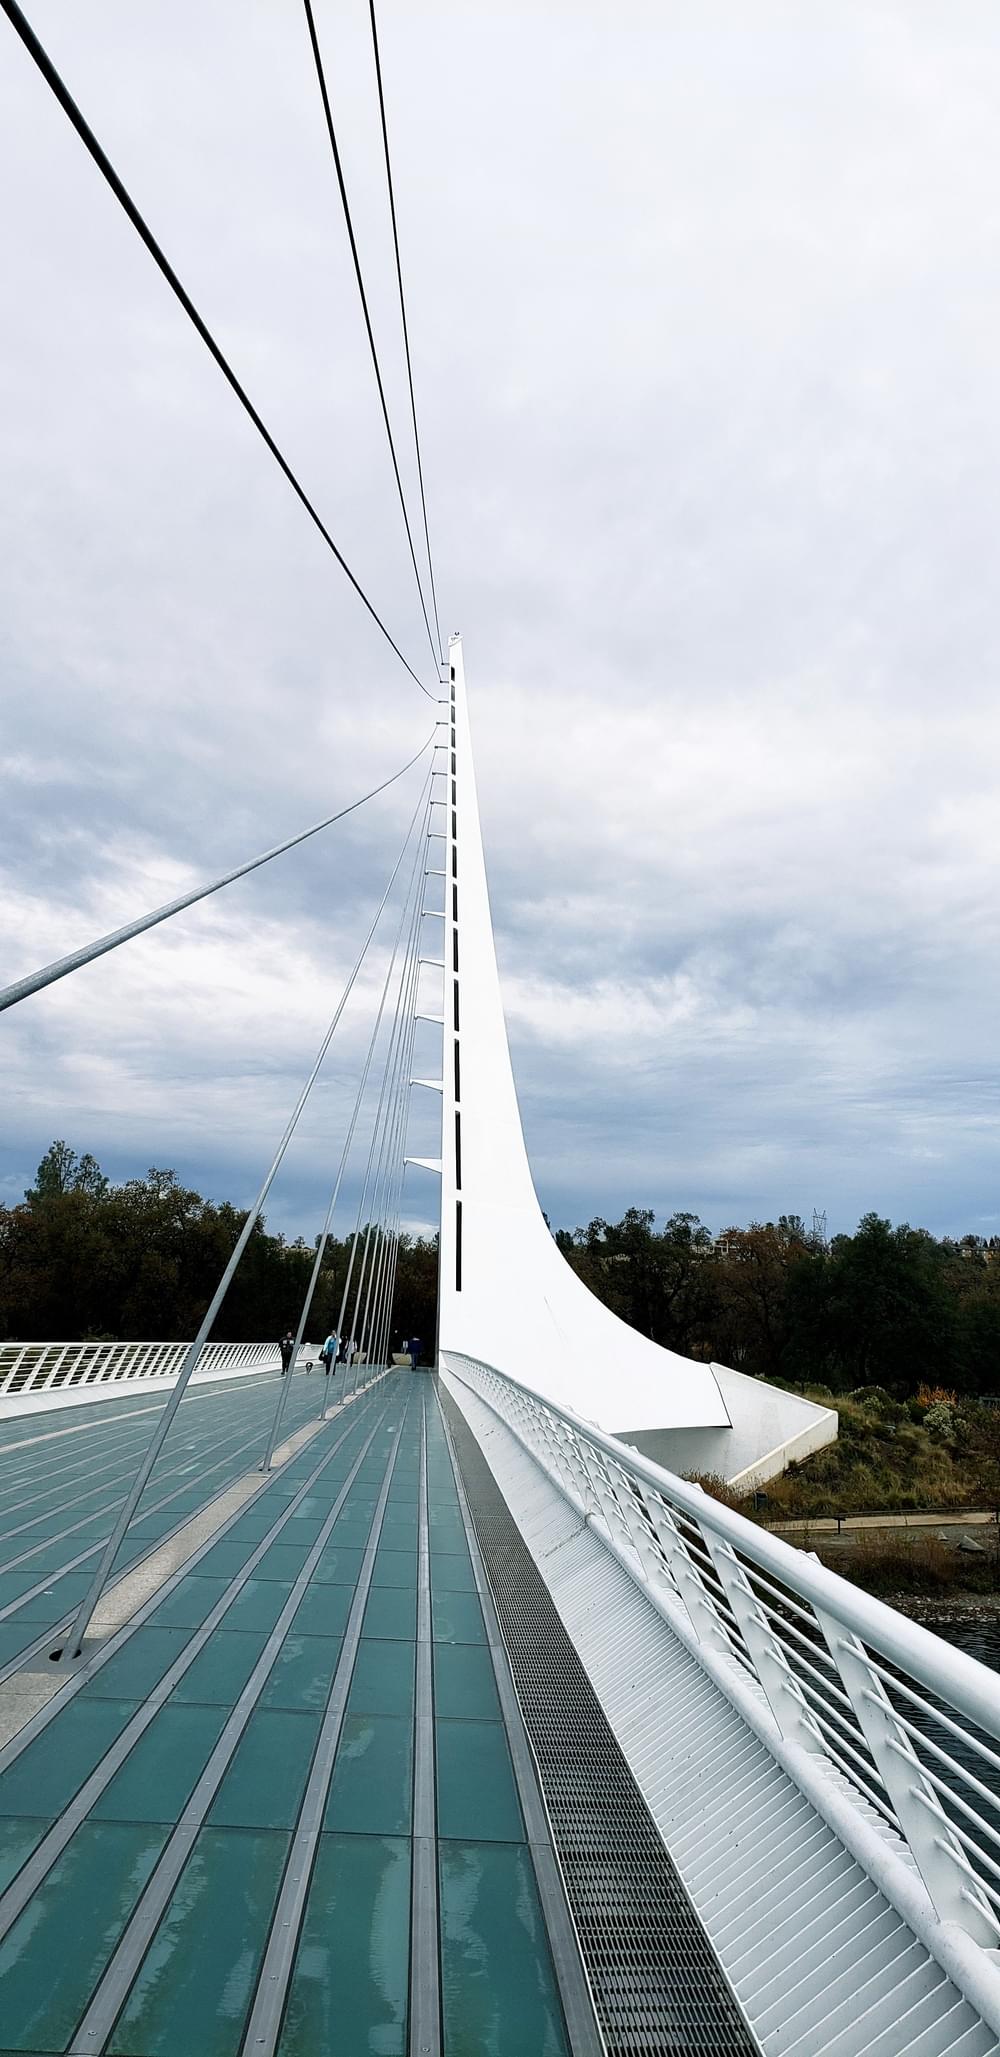 The Sundial Bridge; a mixture of glass, steel and concrete spans the Sacramento River in Redding, California.